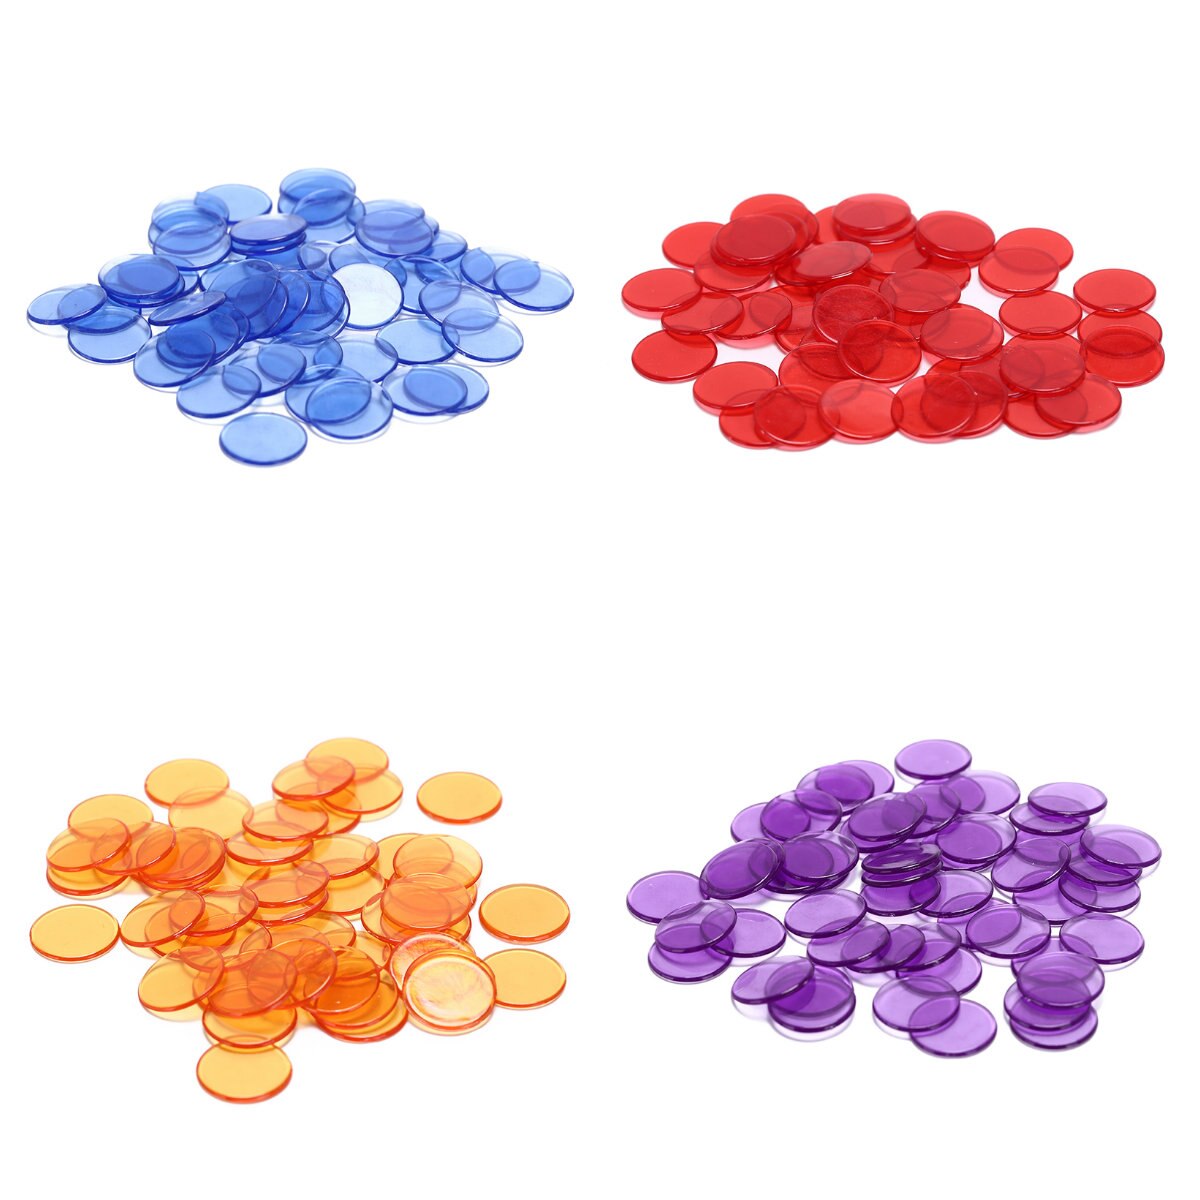 50 stk 1.5cm plastik poker chips casino bingo markører til sjov familie klub karneval bingo spil leverer acce 5 farver